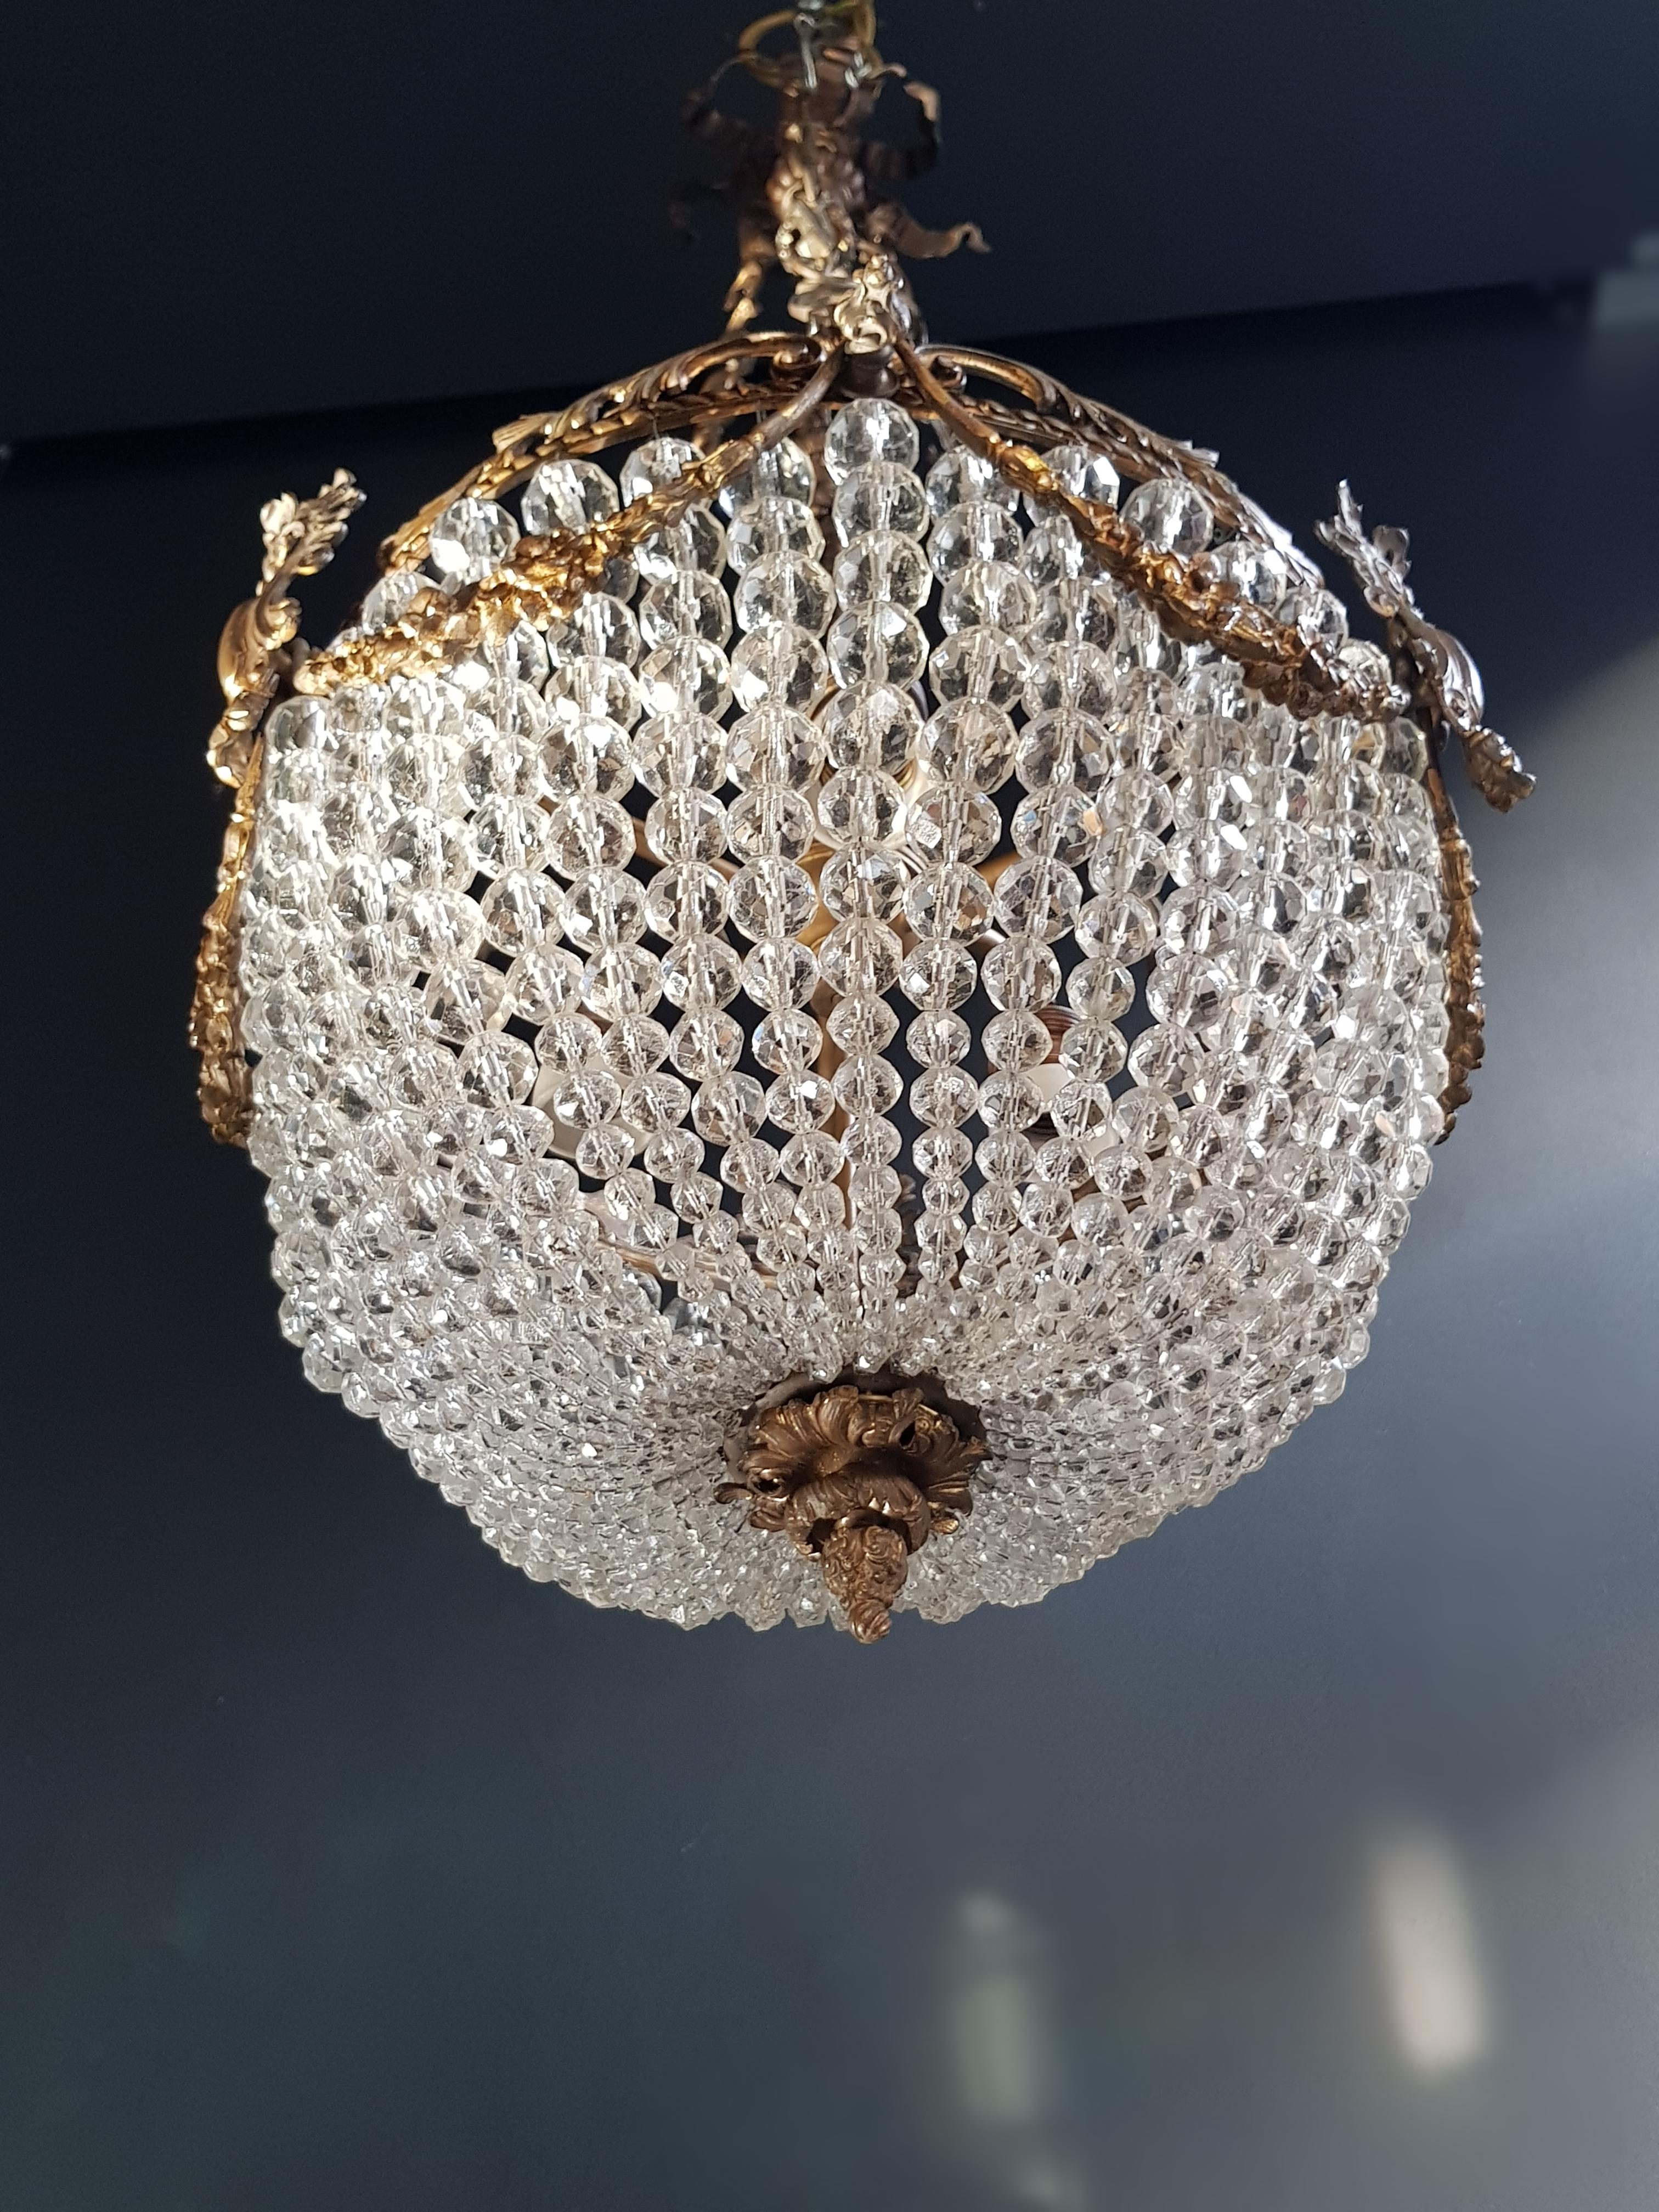 Hand-Crafted Beaded Crystal Basket Chandelier Antique Ceiling Lamp Lustre Art Nouveau